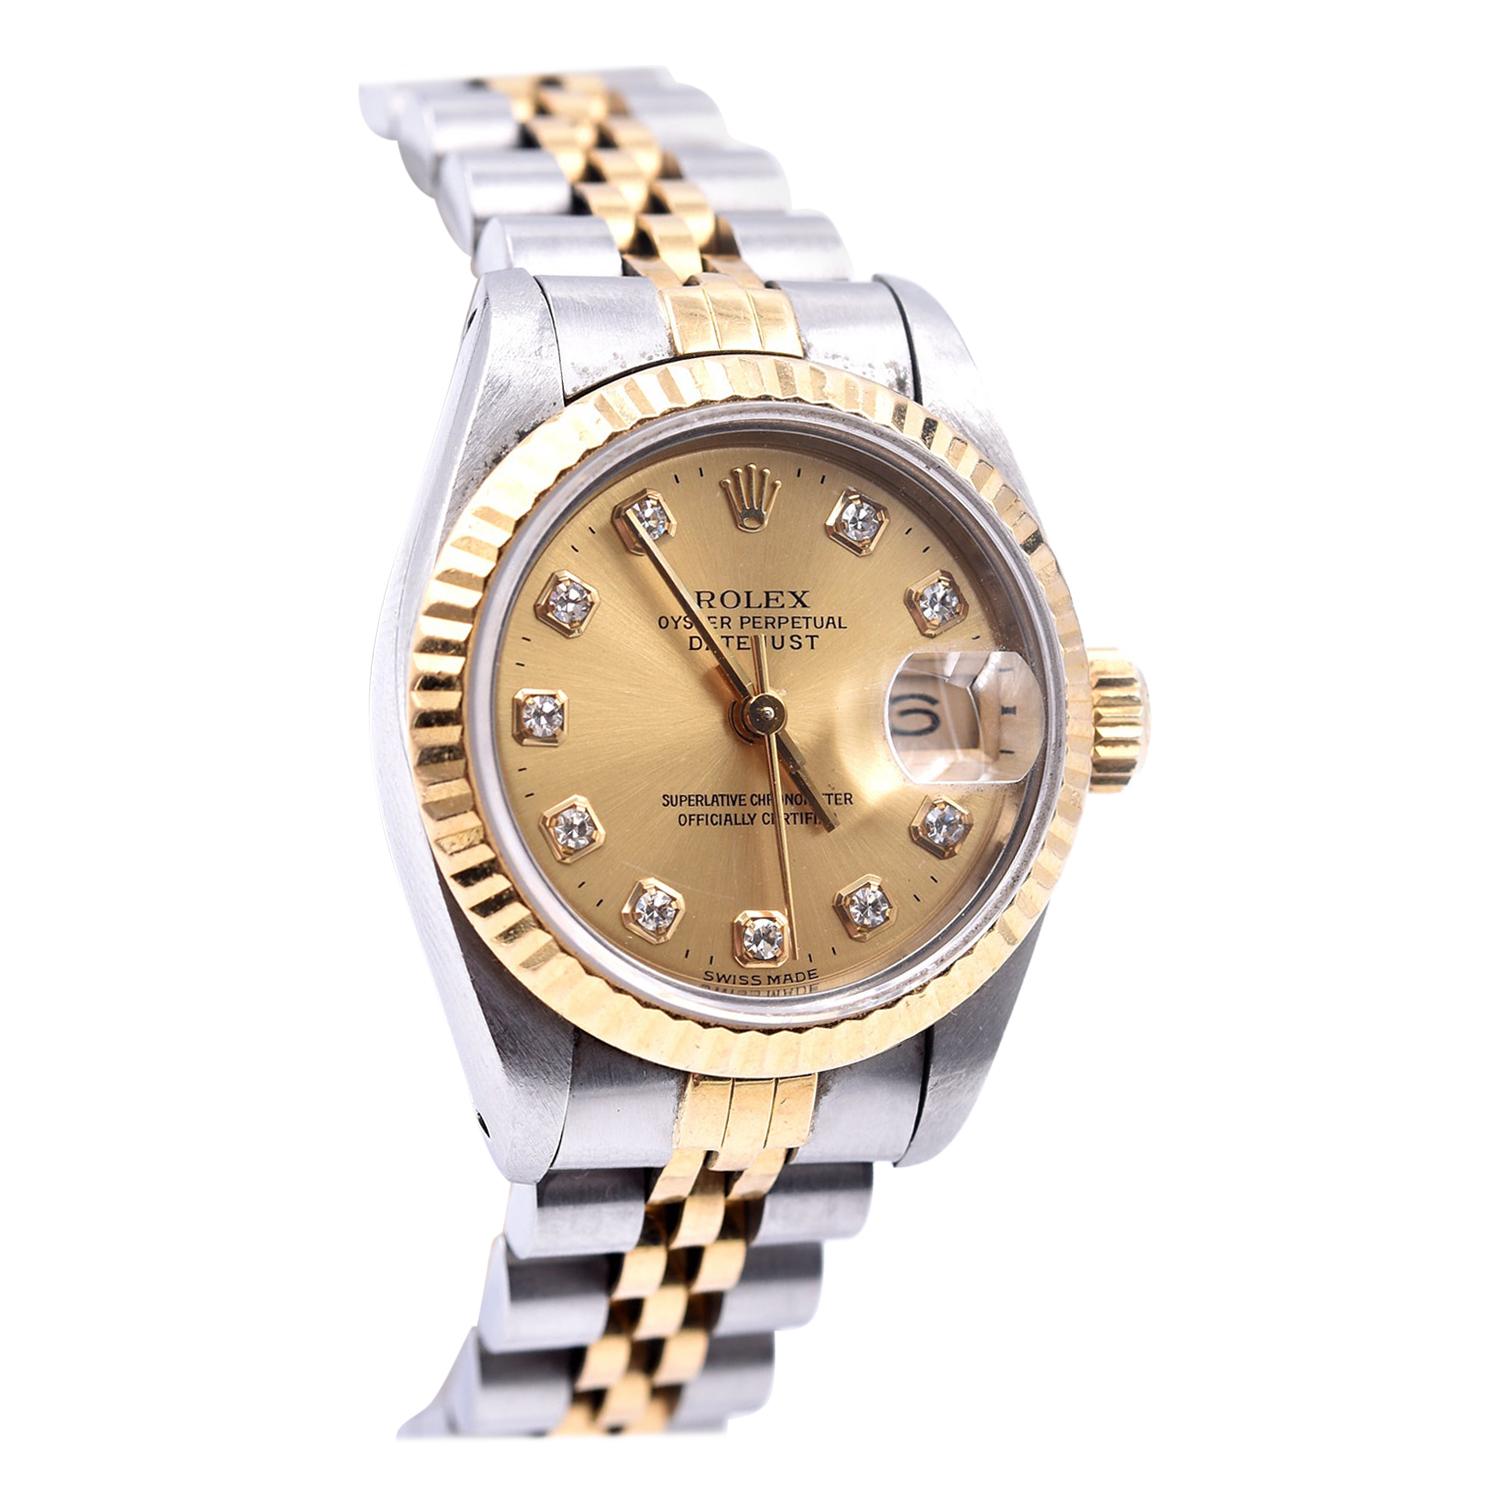 Rolex Stainless Steel/18 Karat Gold Datejust with Diamond Dial Watch Ref. 6917